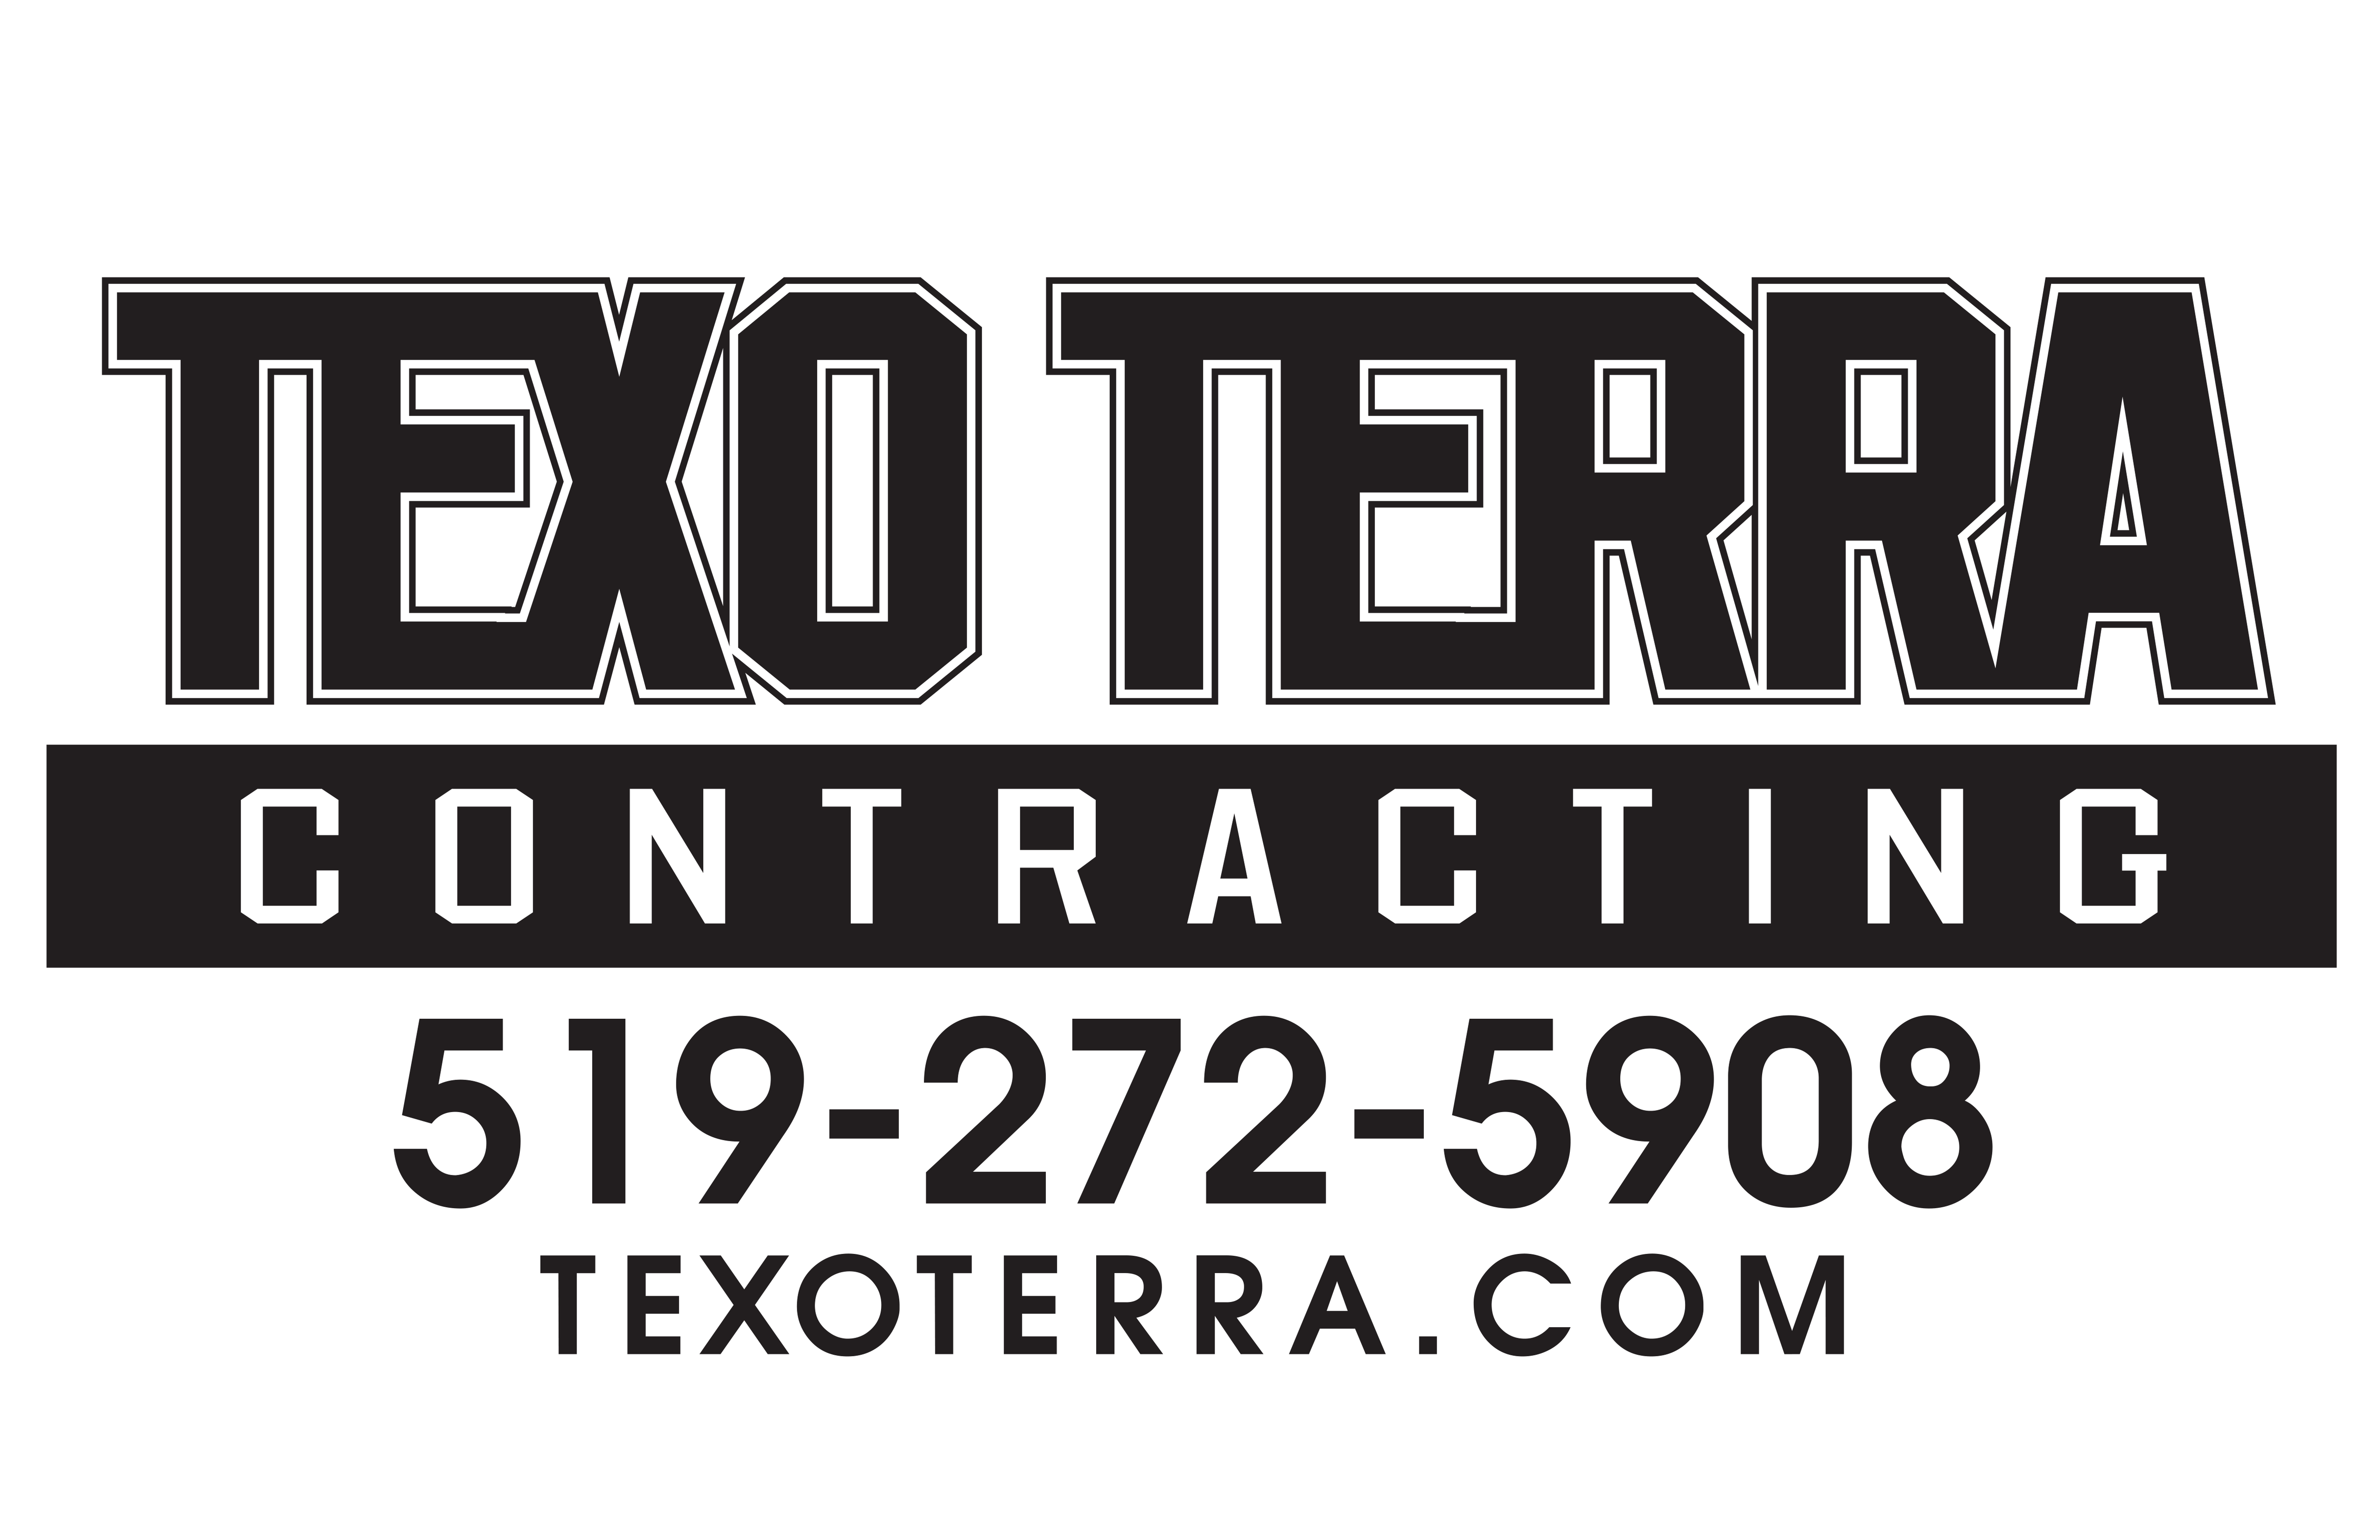 Texo Terra Contracting